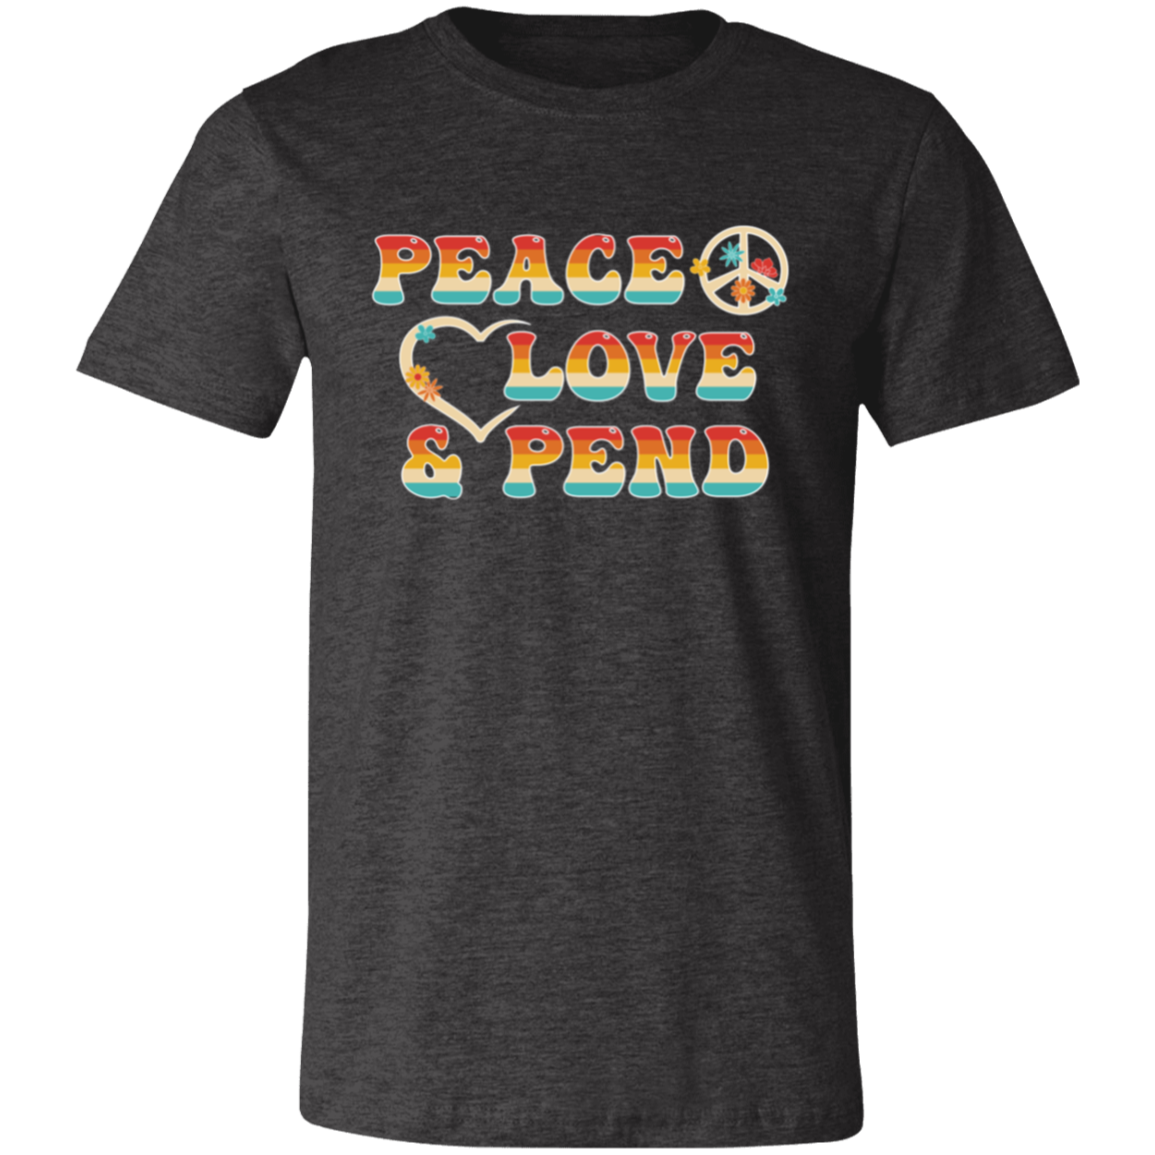 Peace, Love & Pend - Shirt